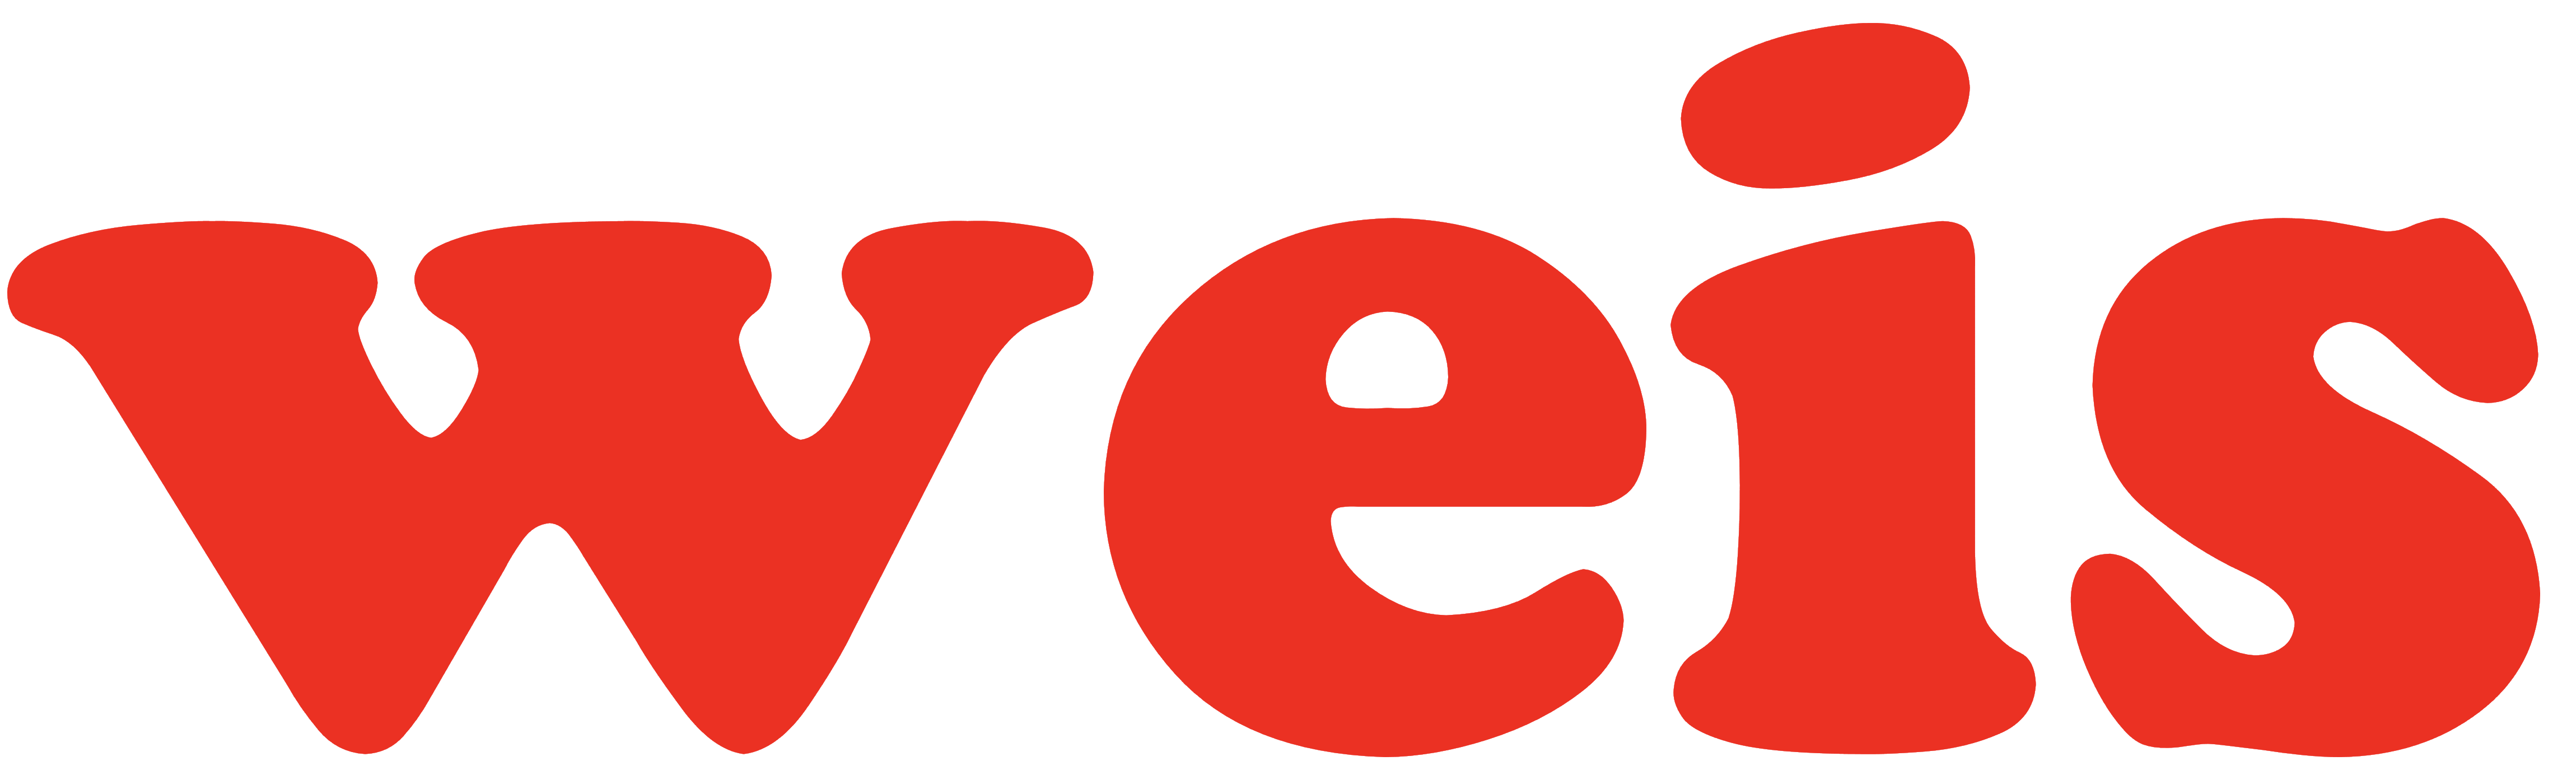 Weis Markets logo, logotype